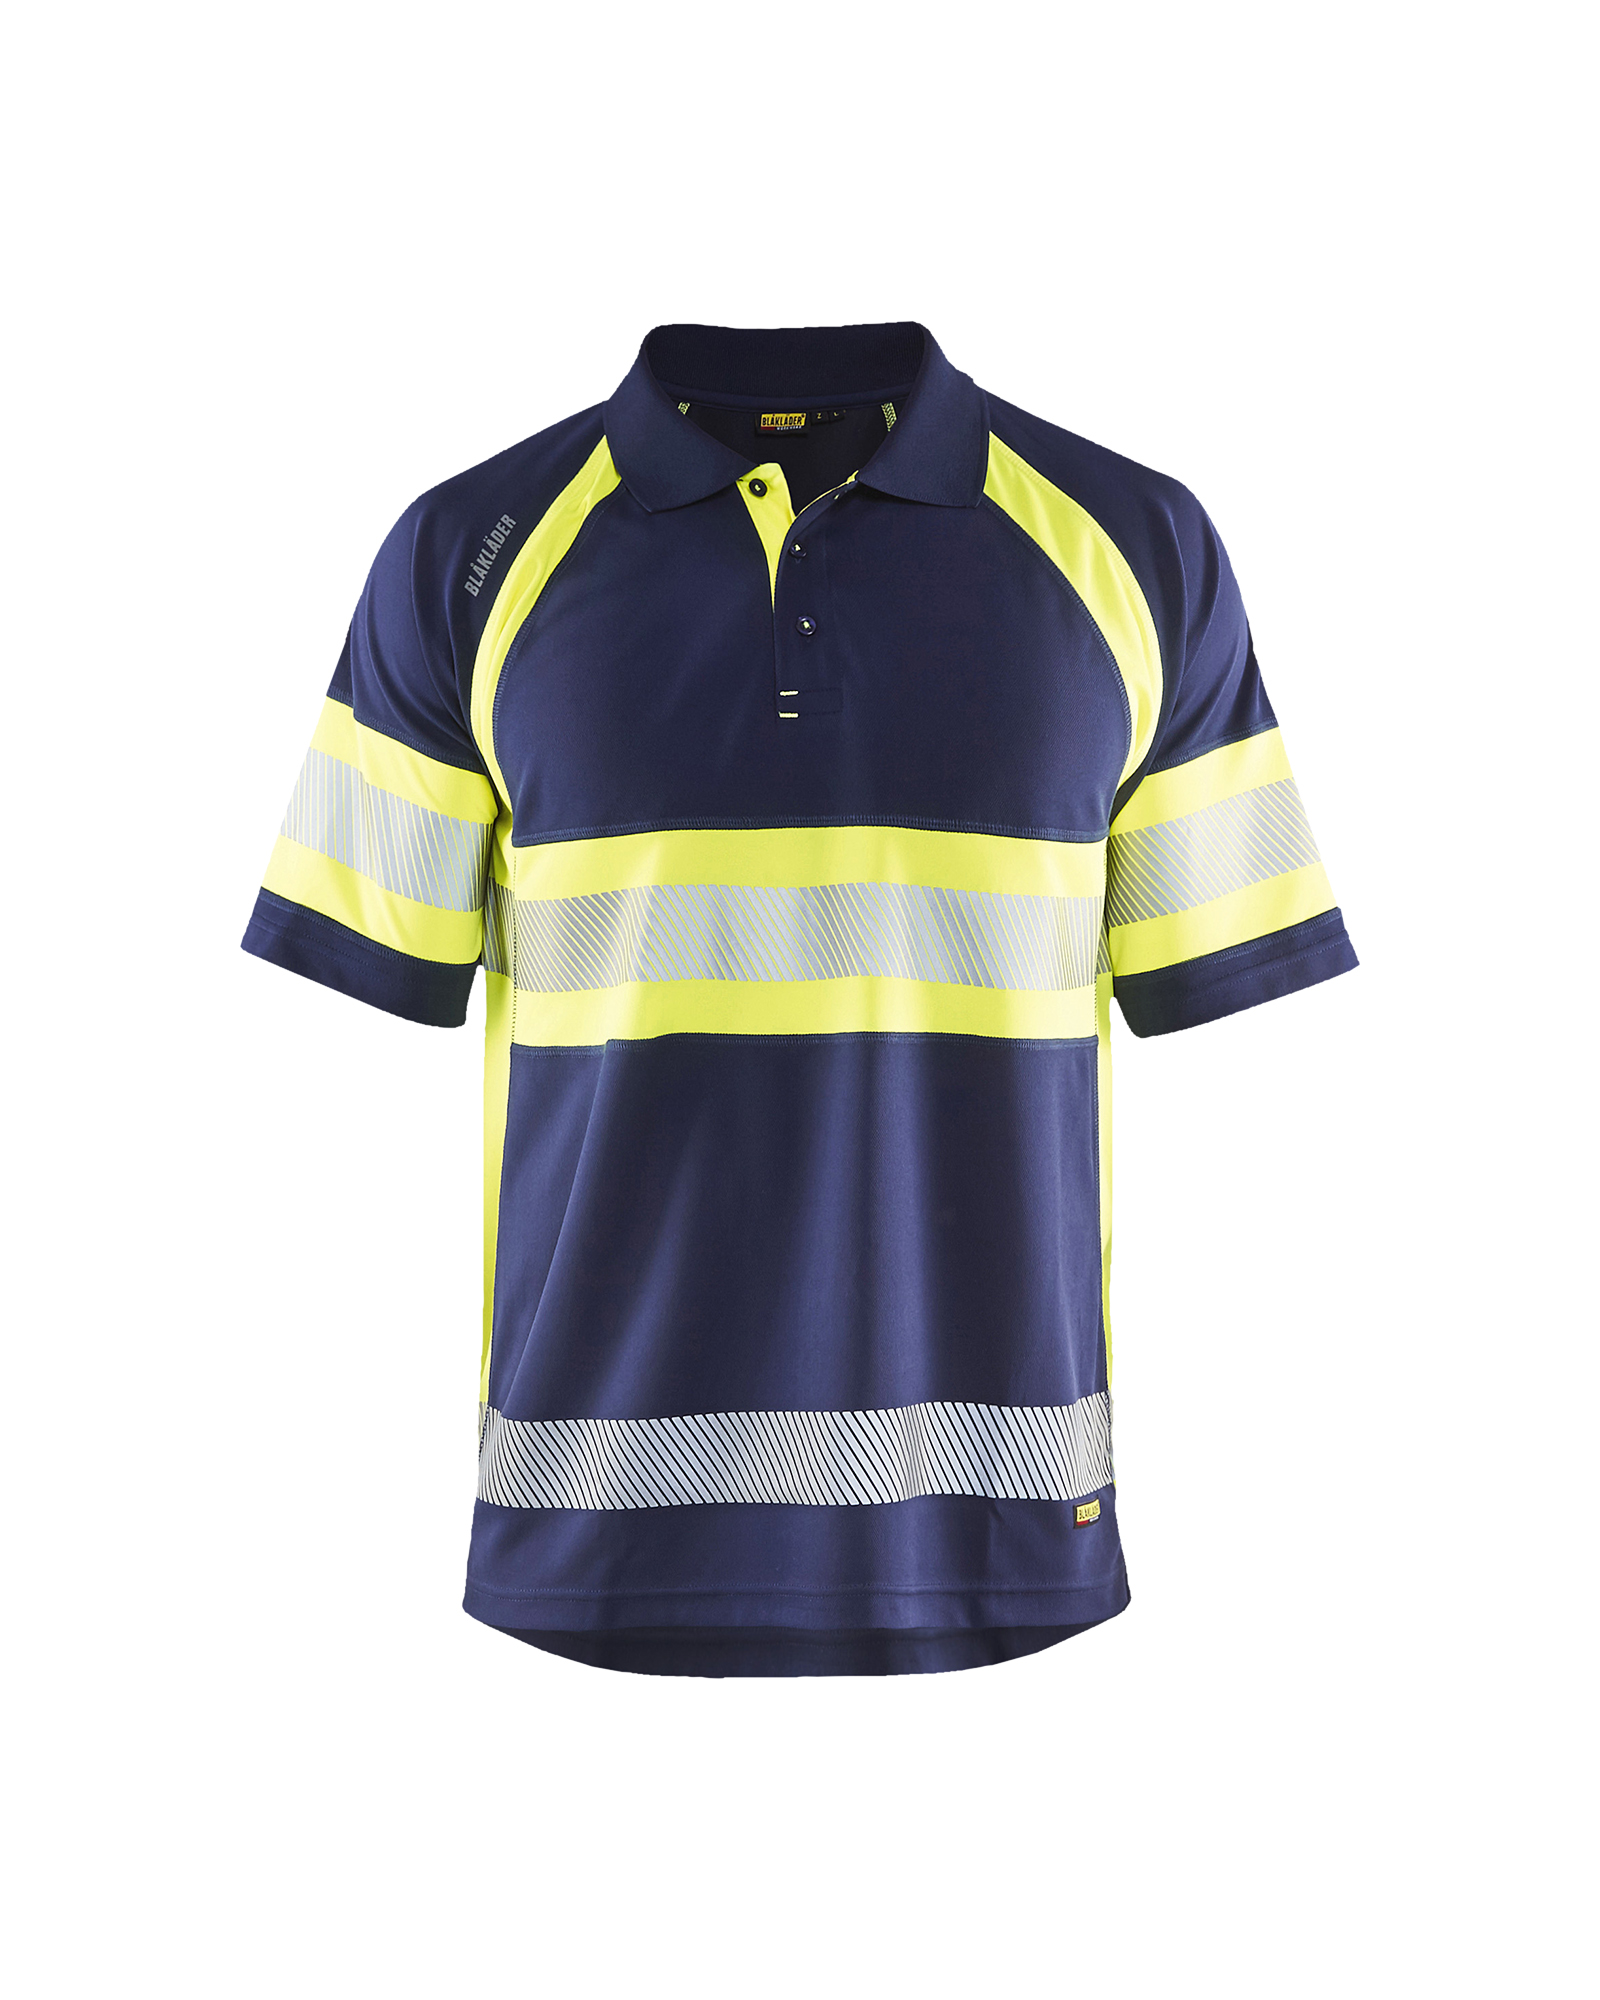 Blåkläder Polo-Shirt 2 farbig Größe L Farbe Marineblau/Grau 33241050 